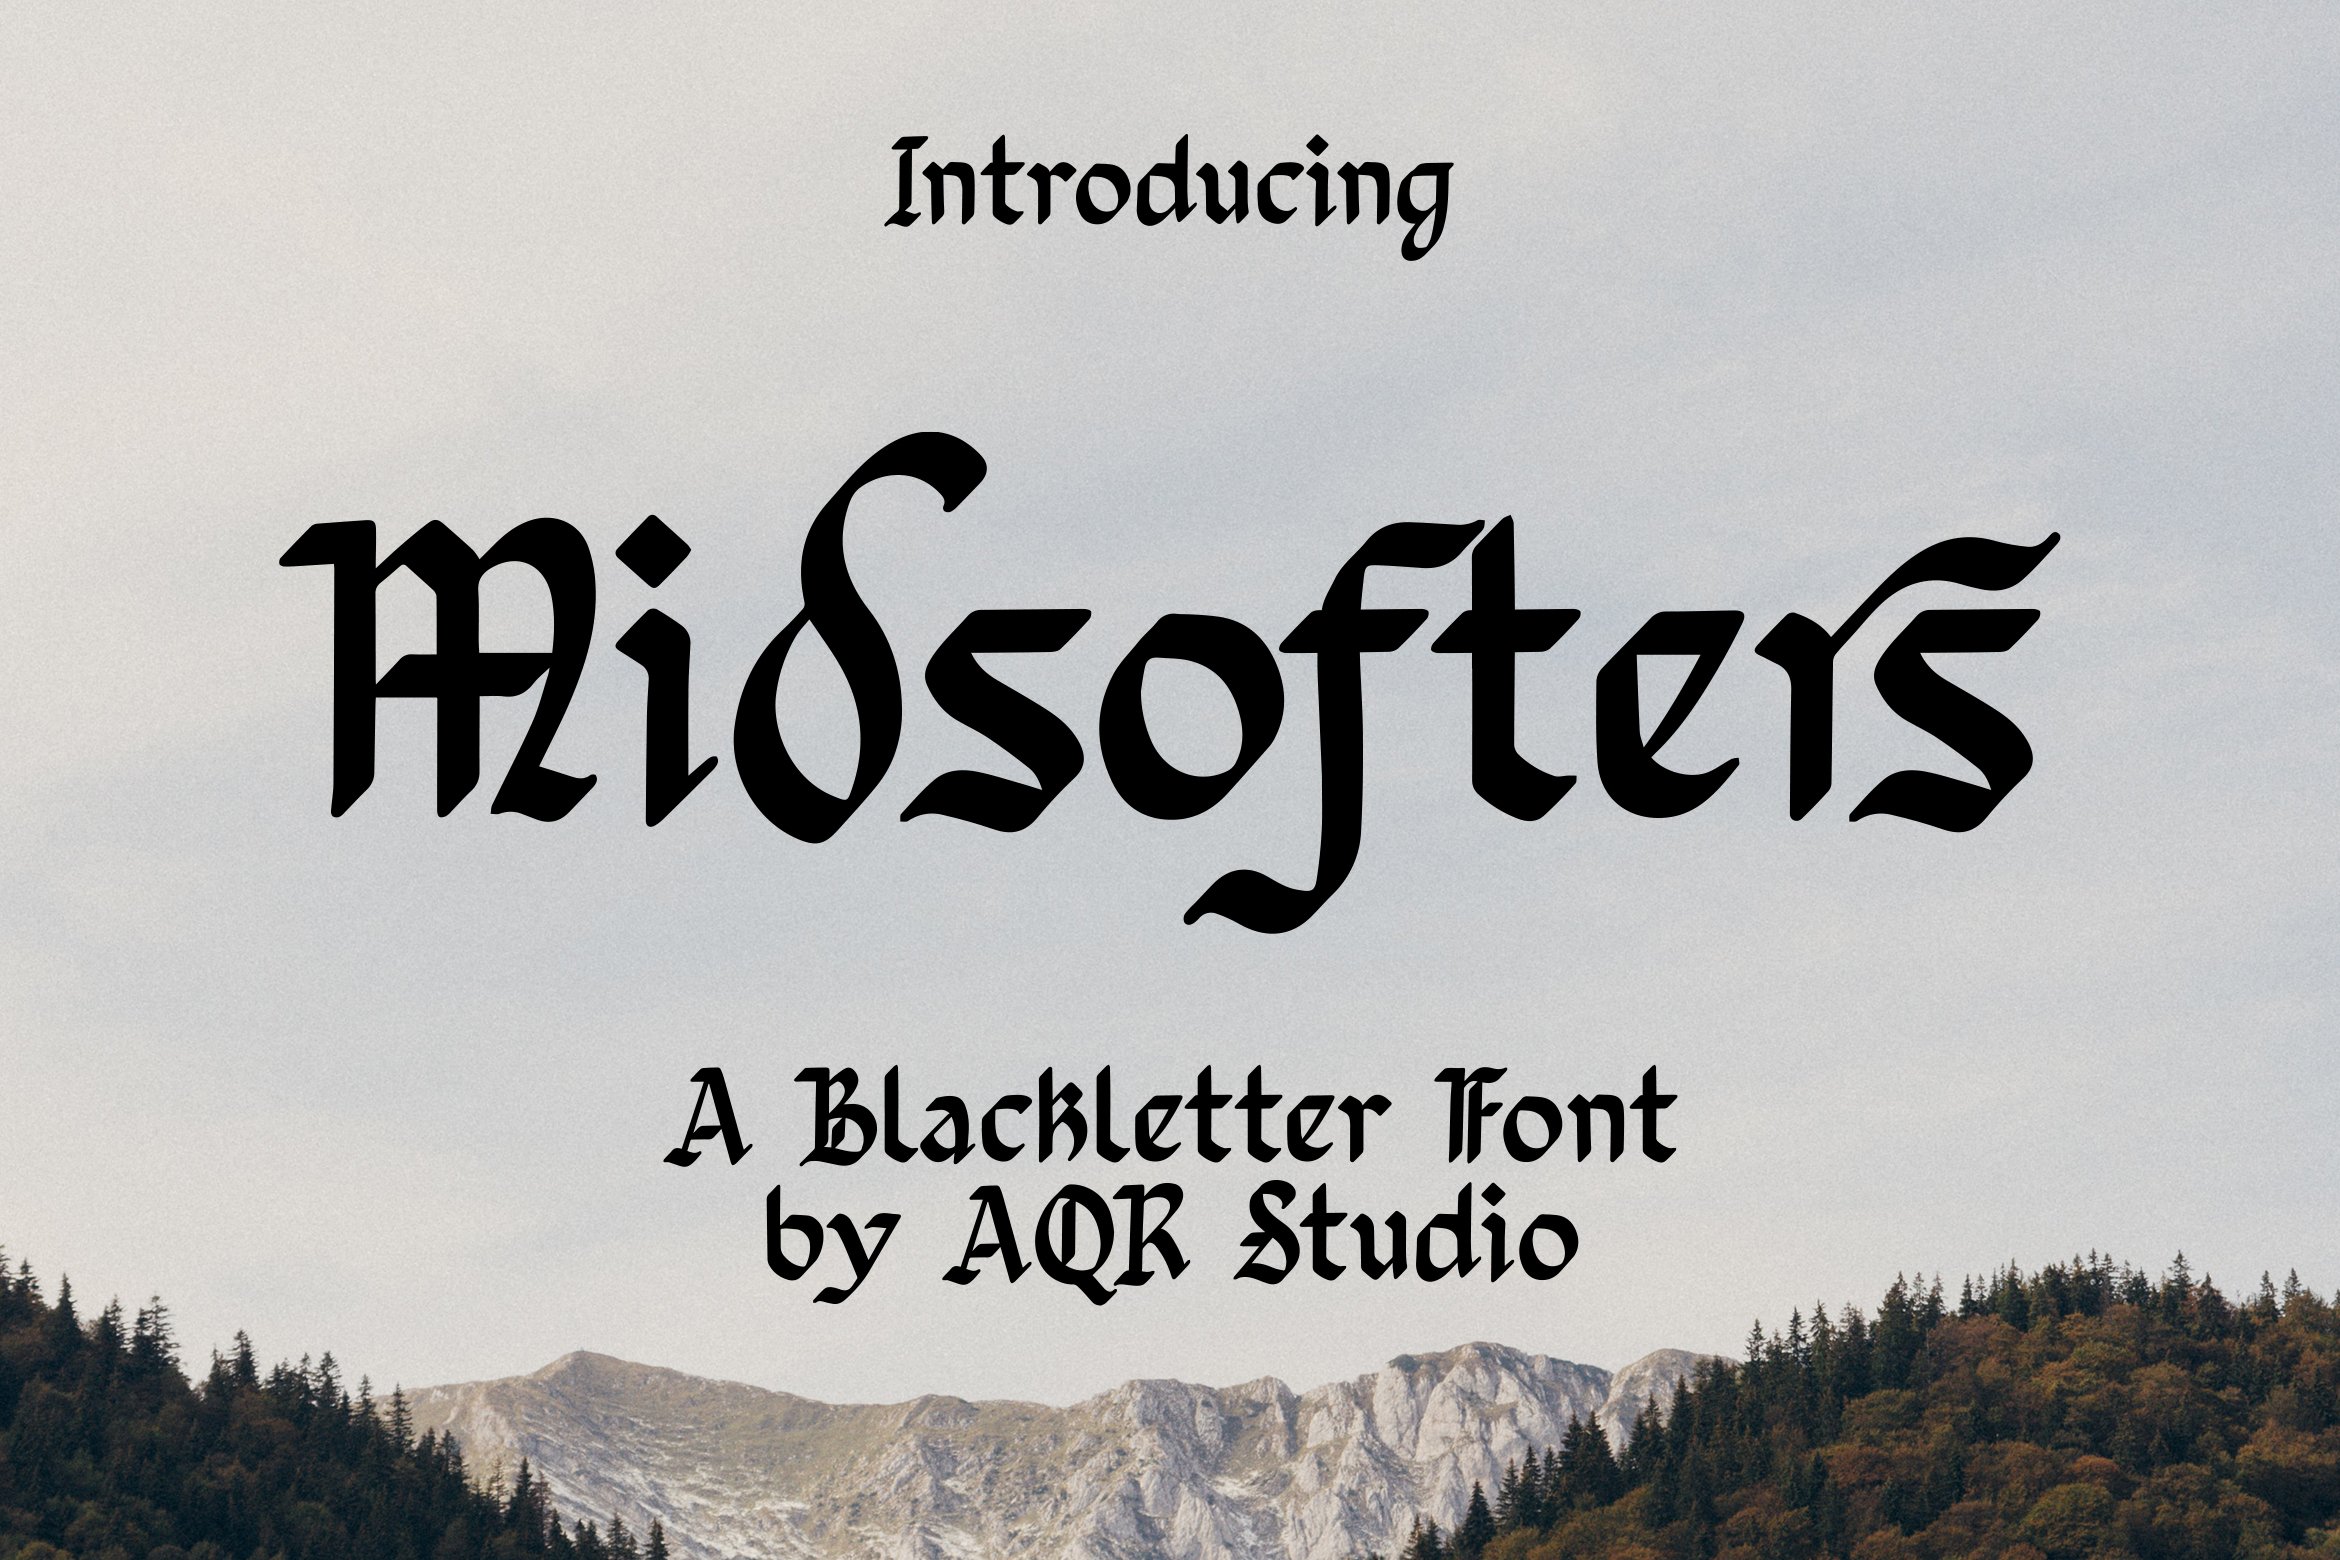 Midsofters - Blackletter Font cover image.